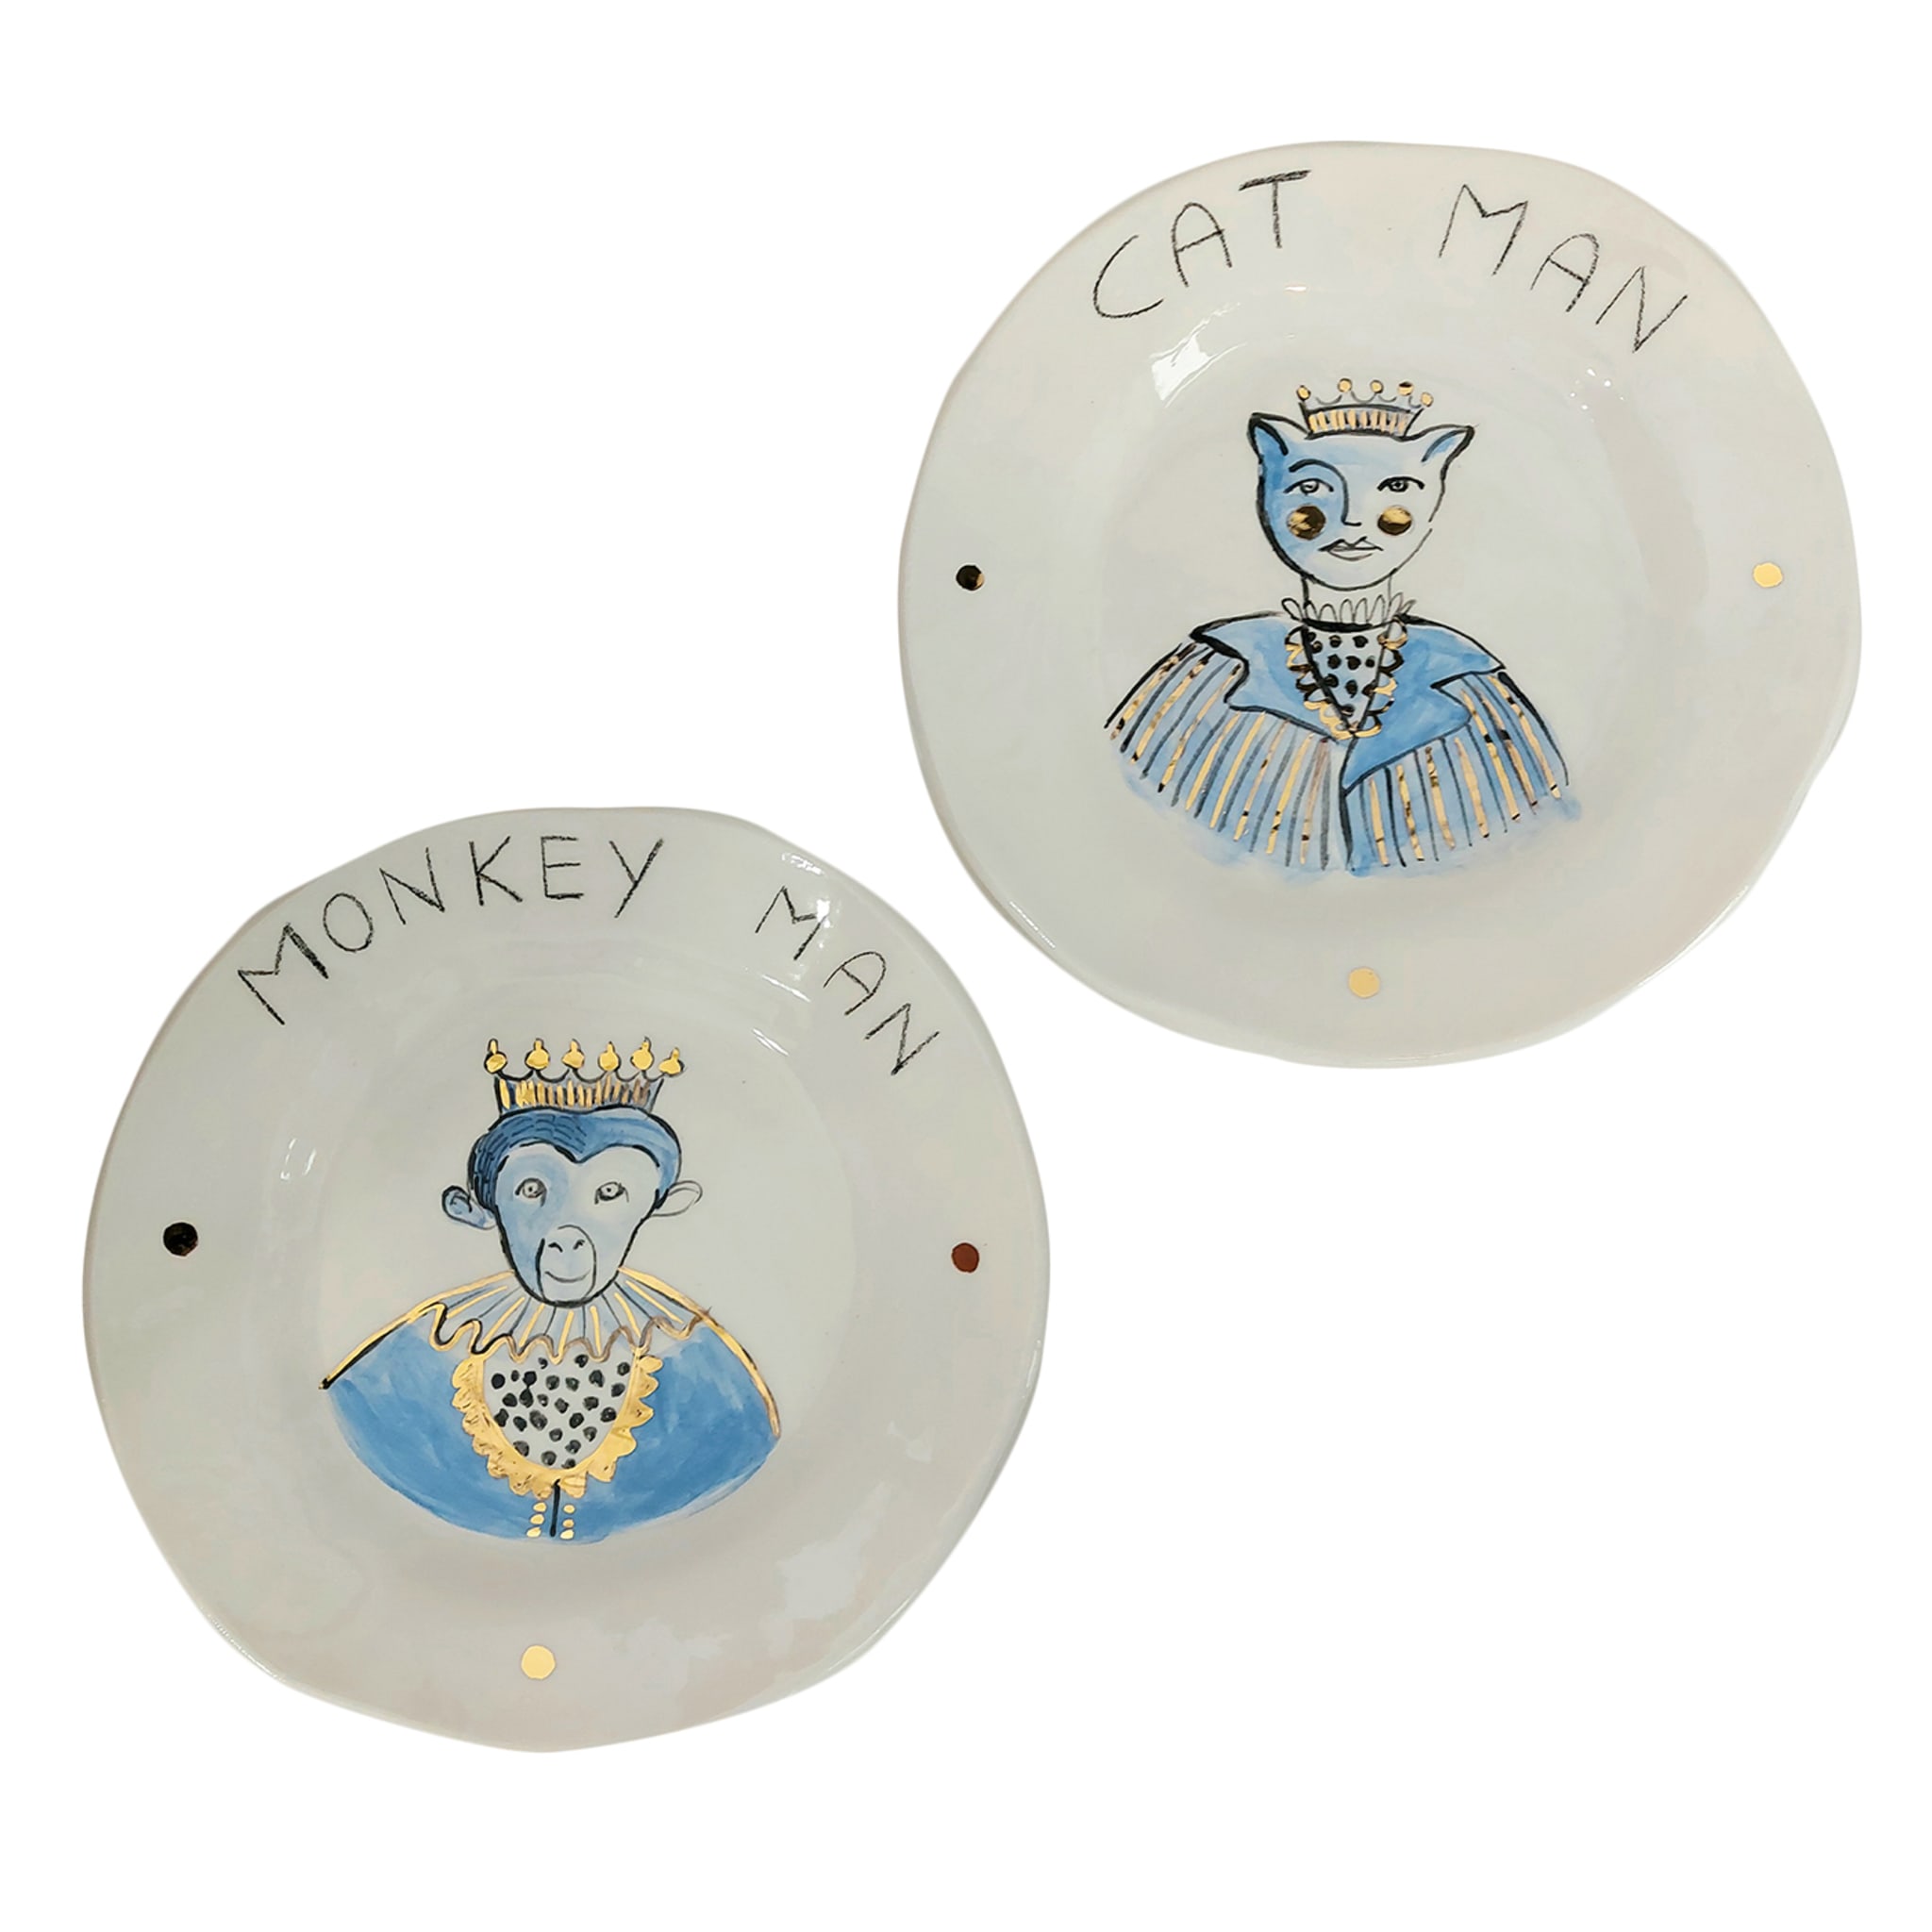 Catman & Monkey Man Set of 2 Plates - Main view